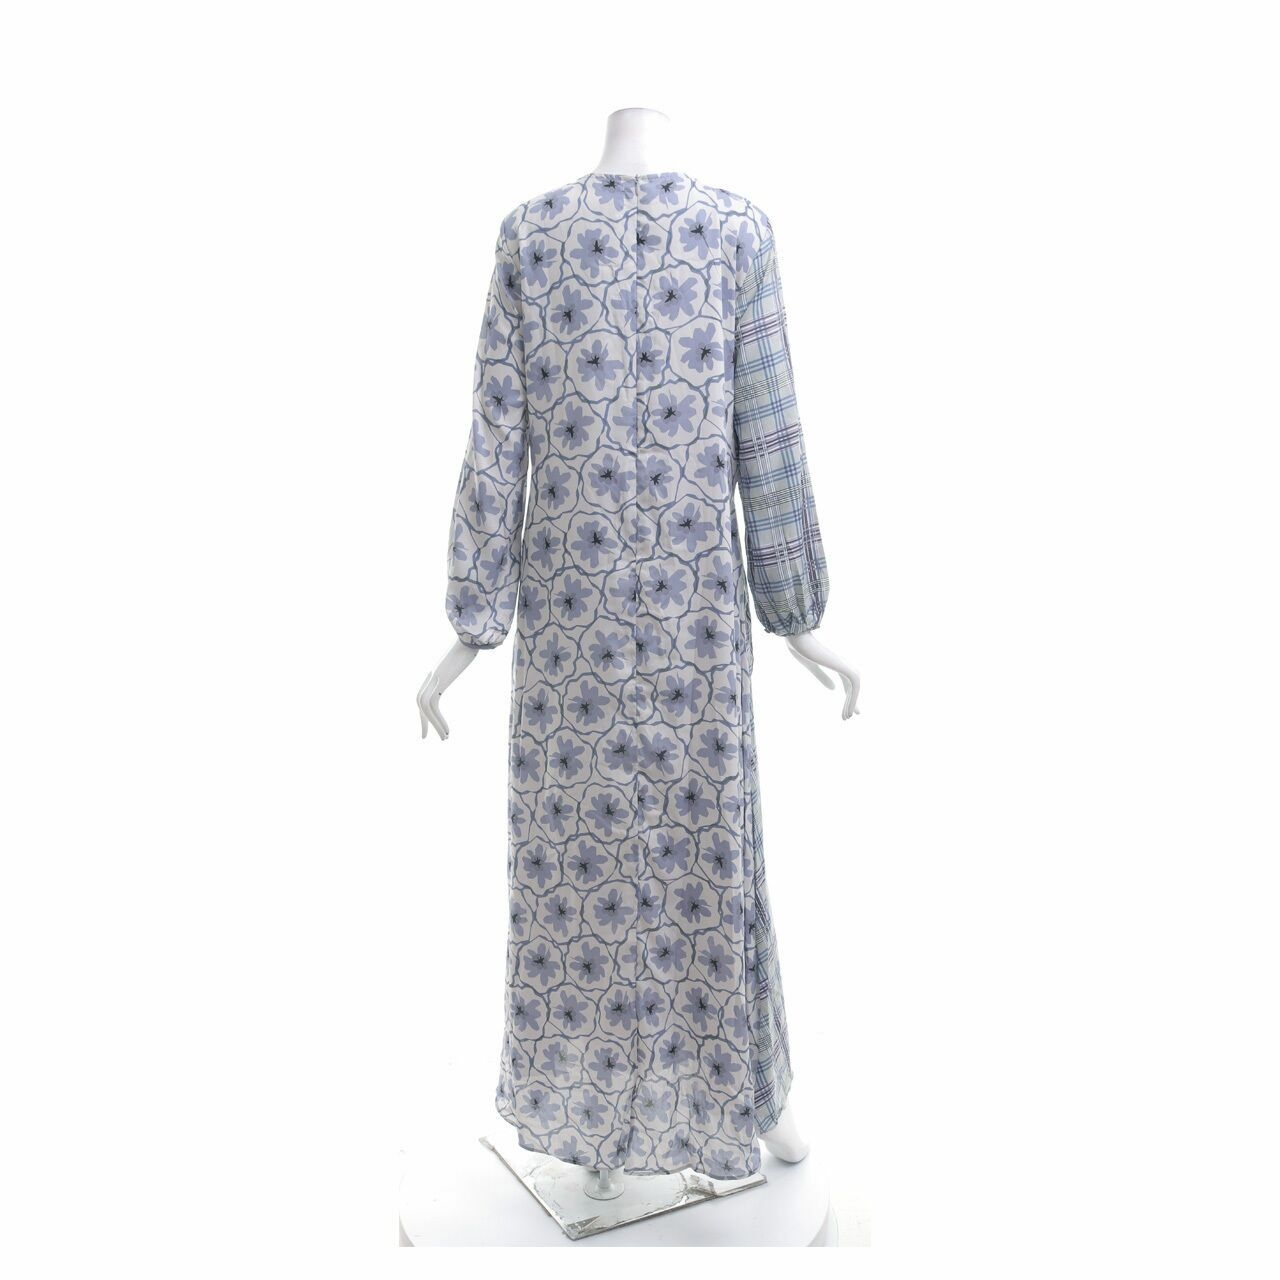 ALLEA Itang Yunasz Multi Pattern Long Dress